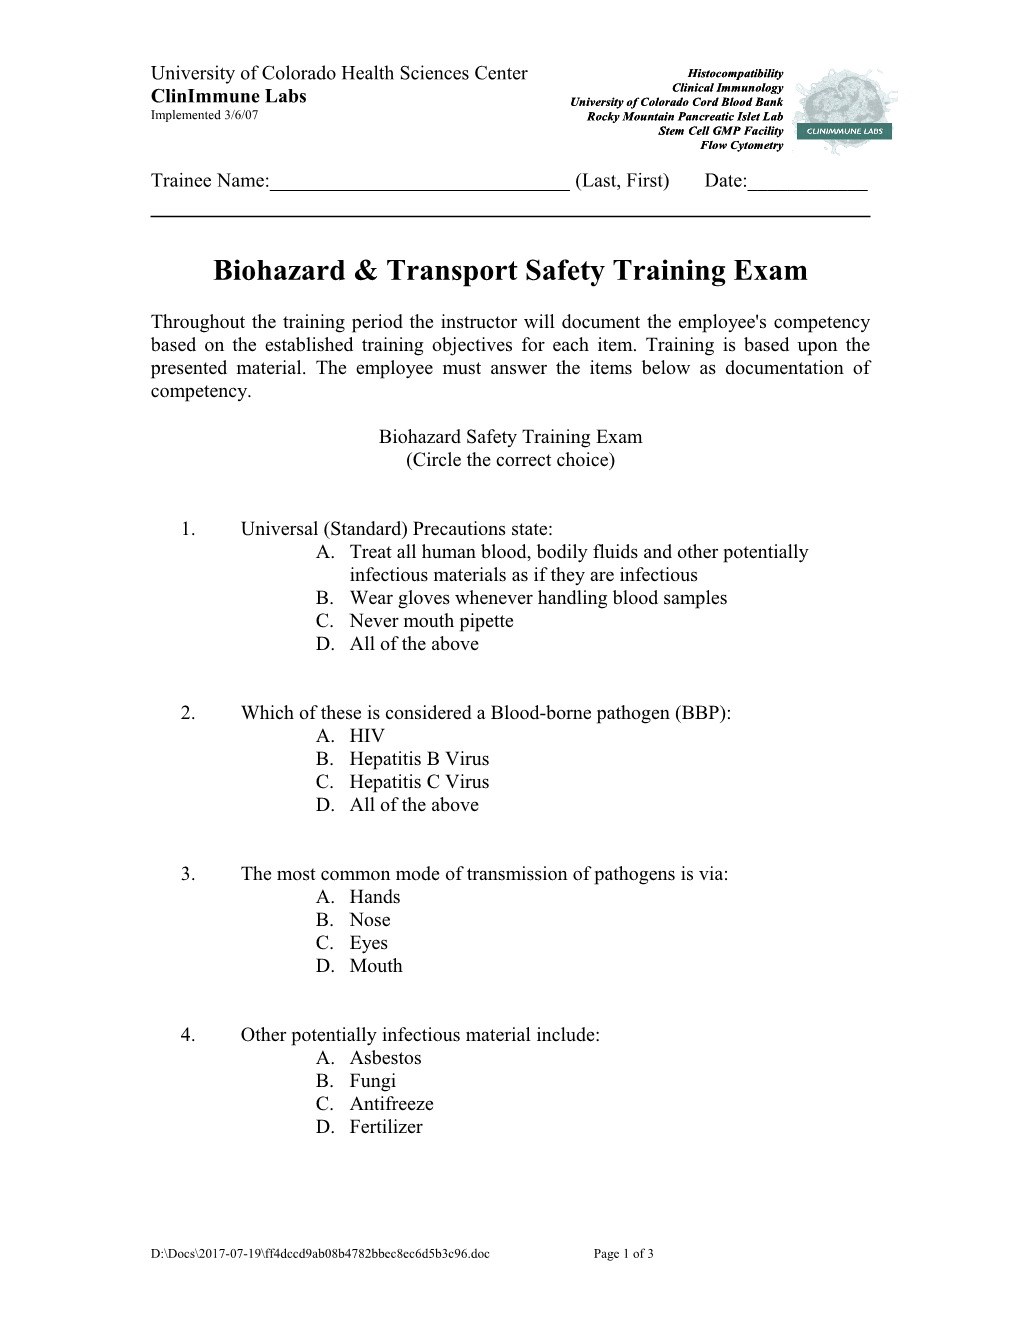 Biohazard Safety Training Exam